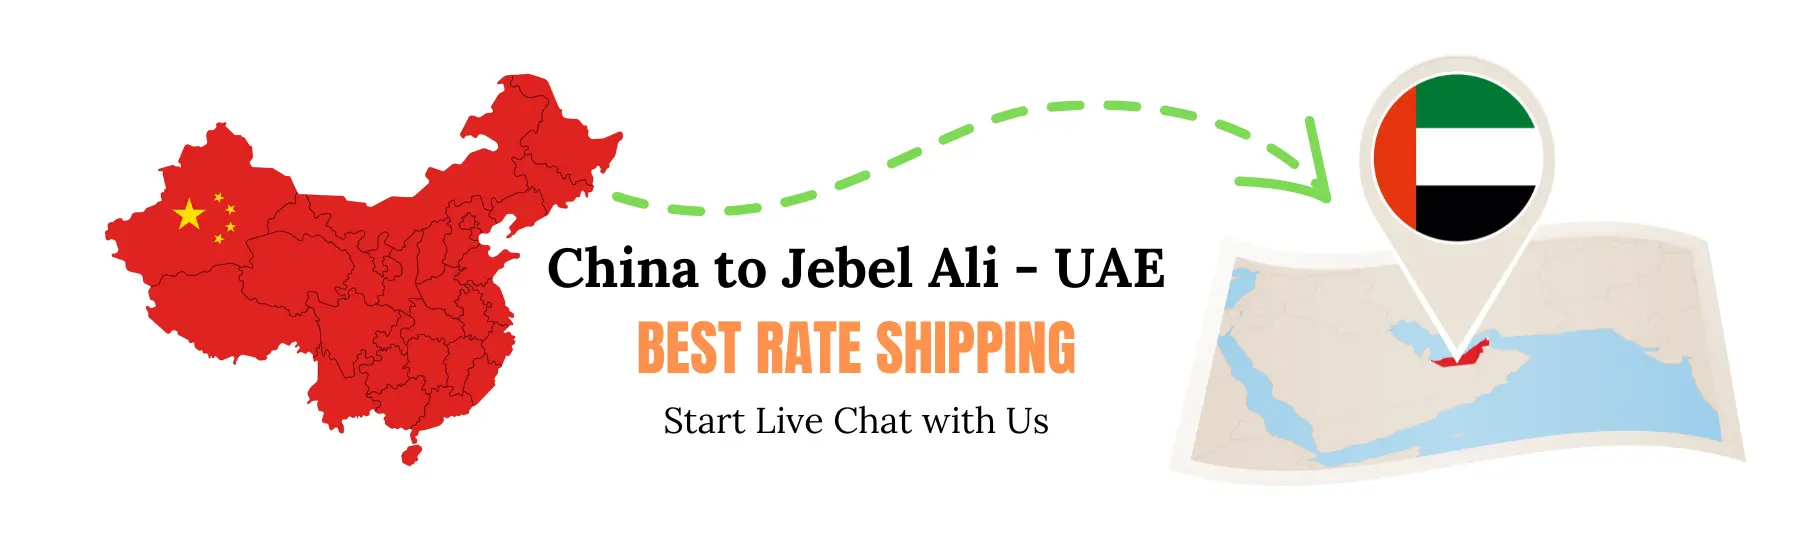 Cheapest Shipping from China to UAE Dubai -Jebel Ali